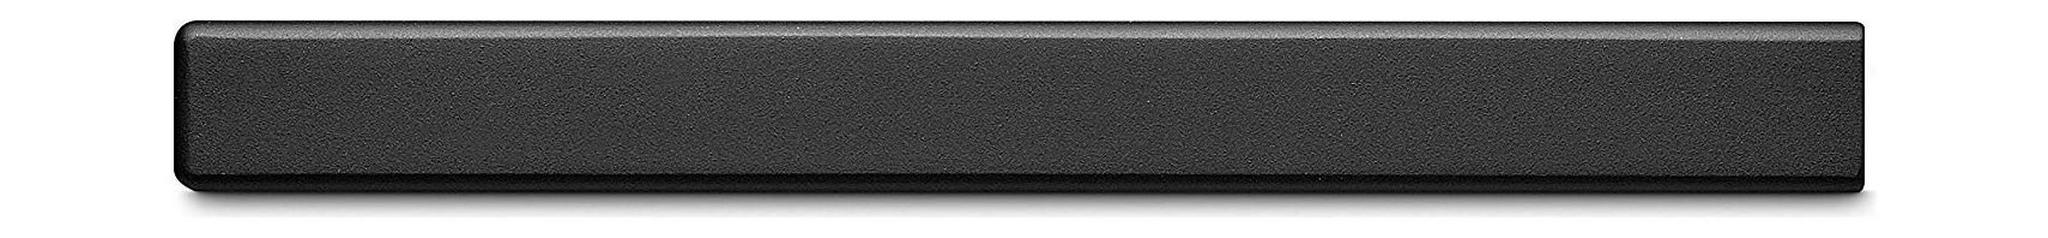 Seagate Backup Plus Ultra Touch Portable Drive 2TB - Black